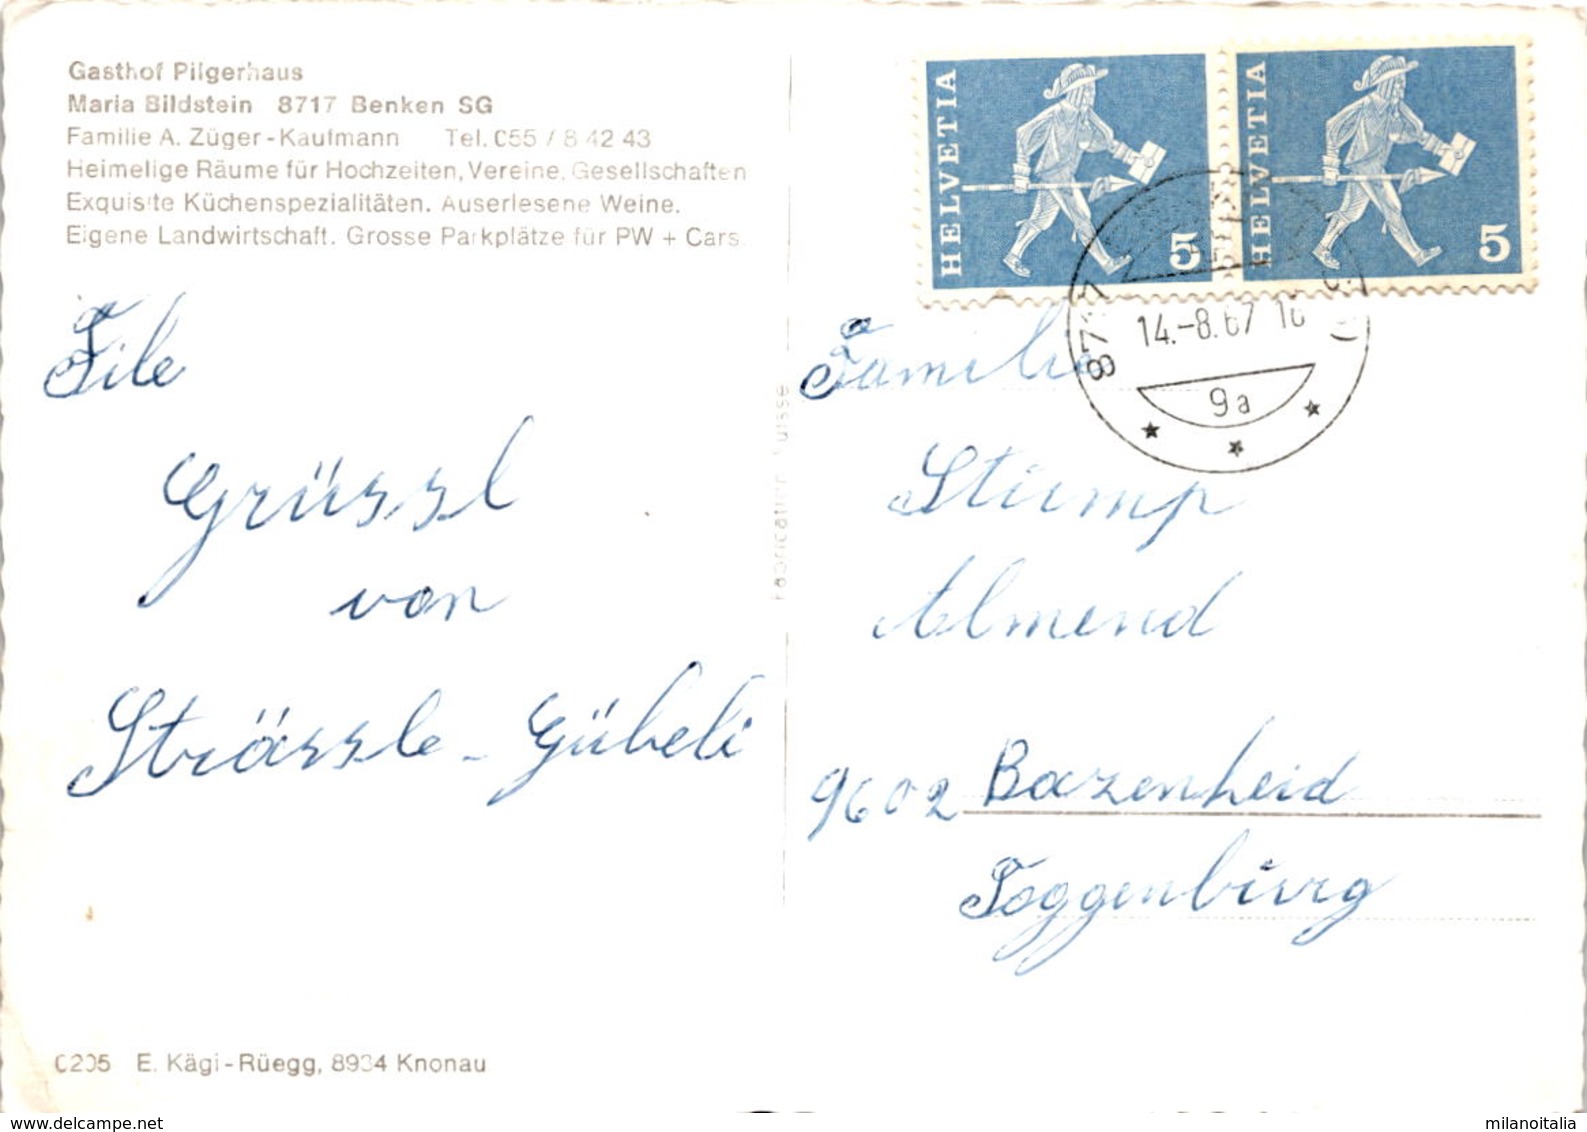 Gasthof Pilgerhaus - Maria Bildstein - Benken SG - 4 Bilder (205) * 14. 8. 1967 - Benken